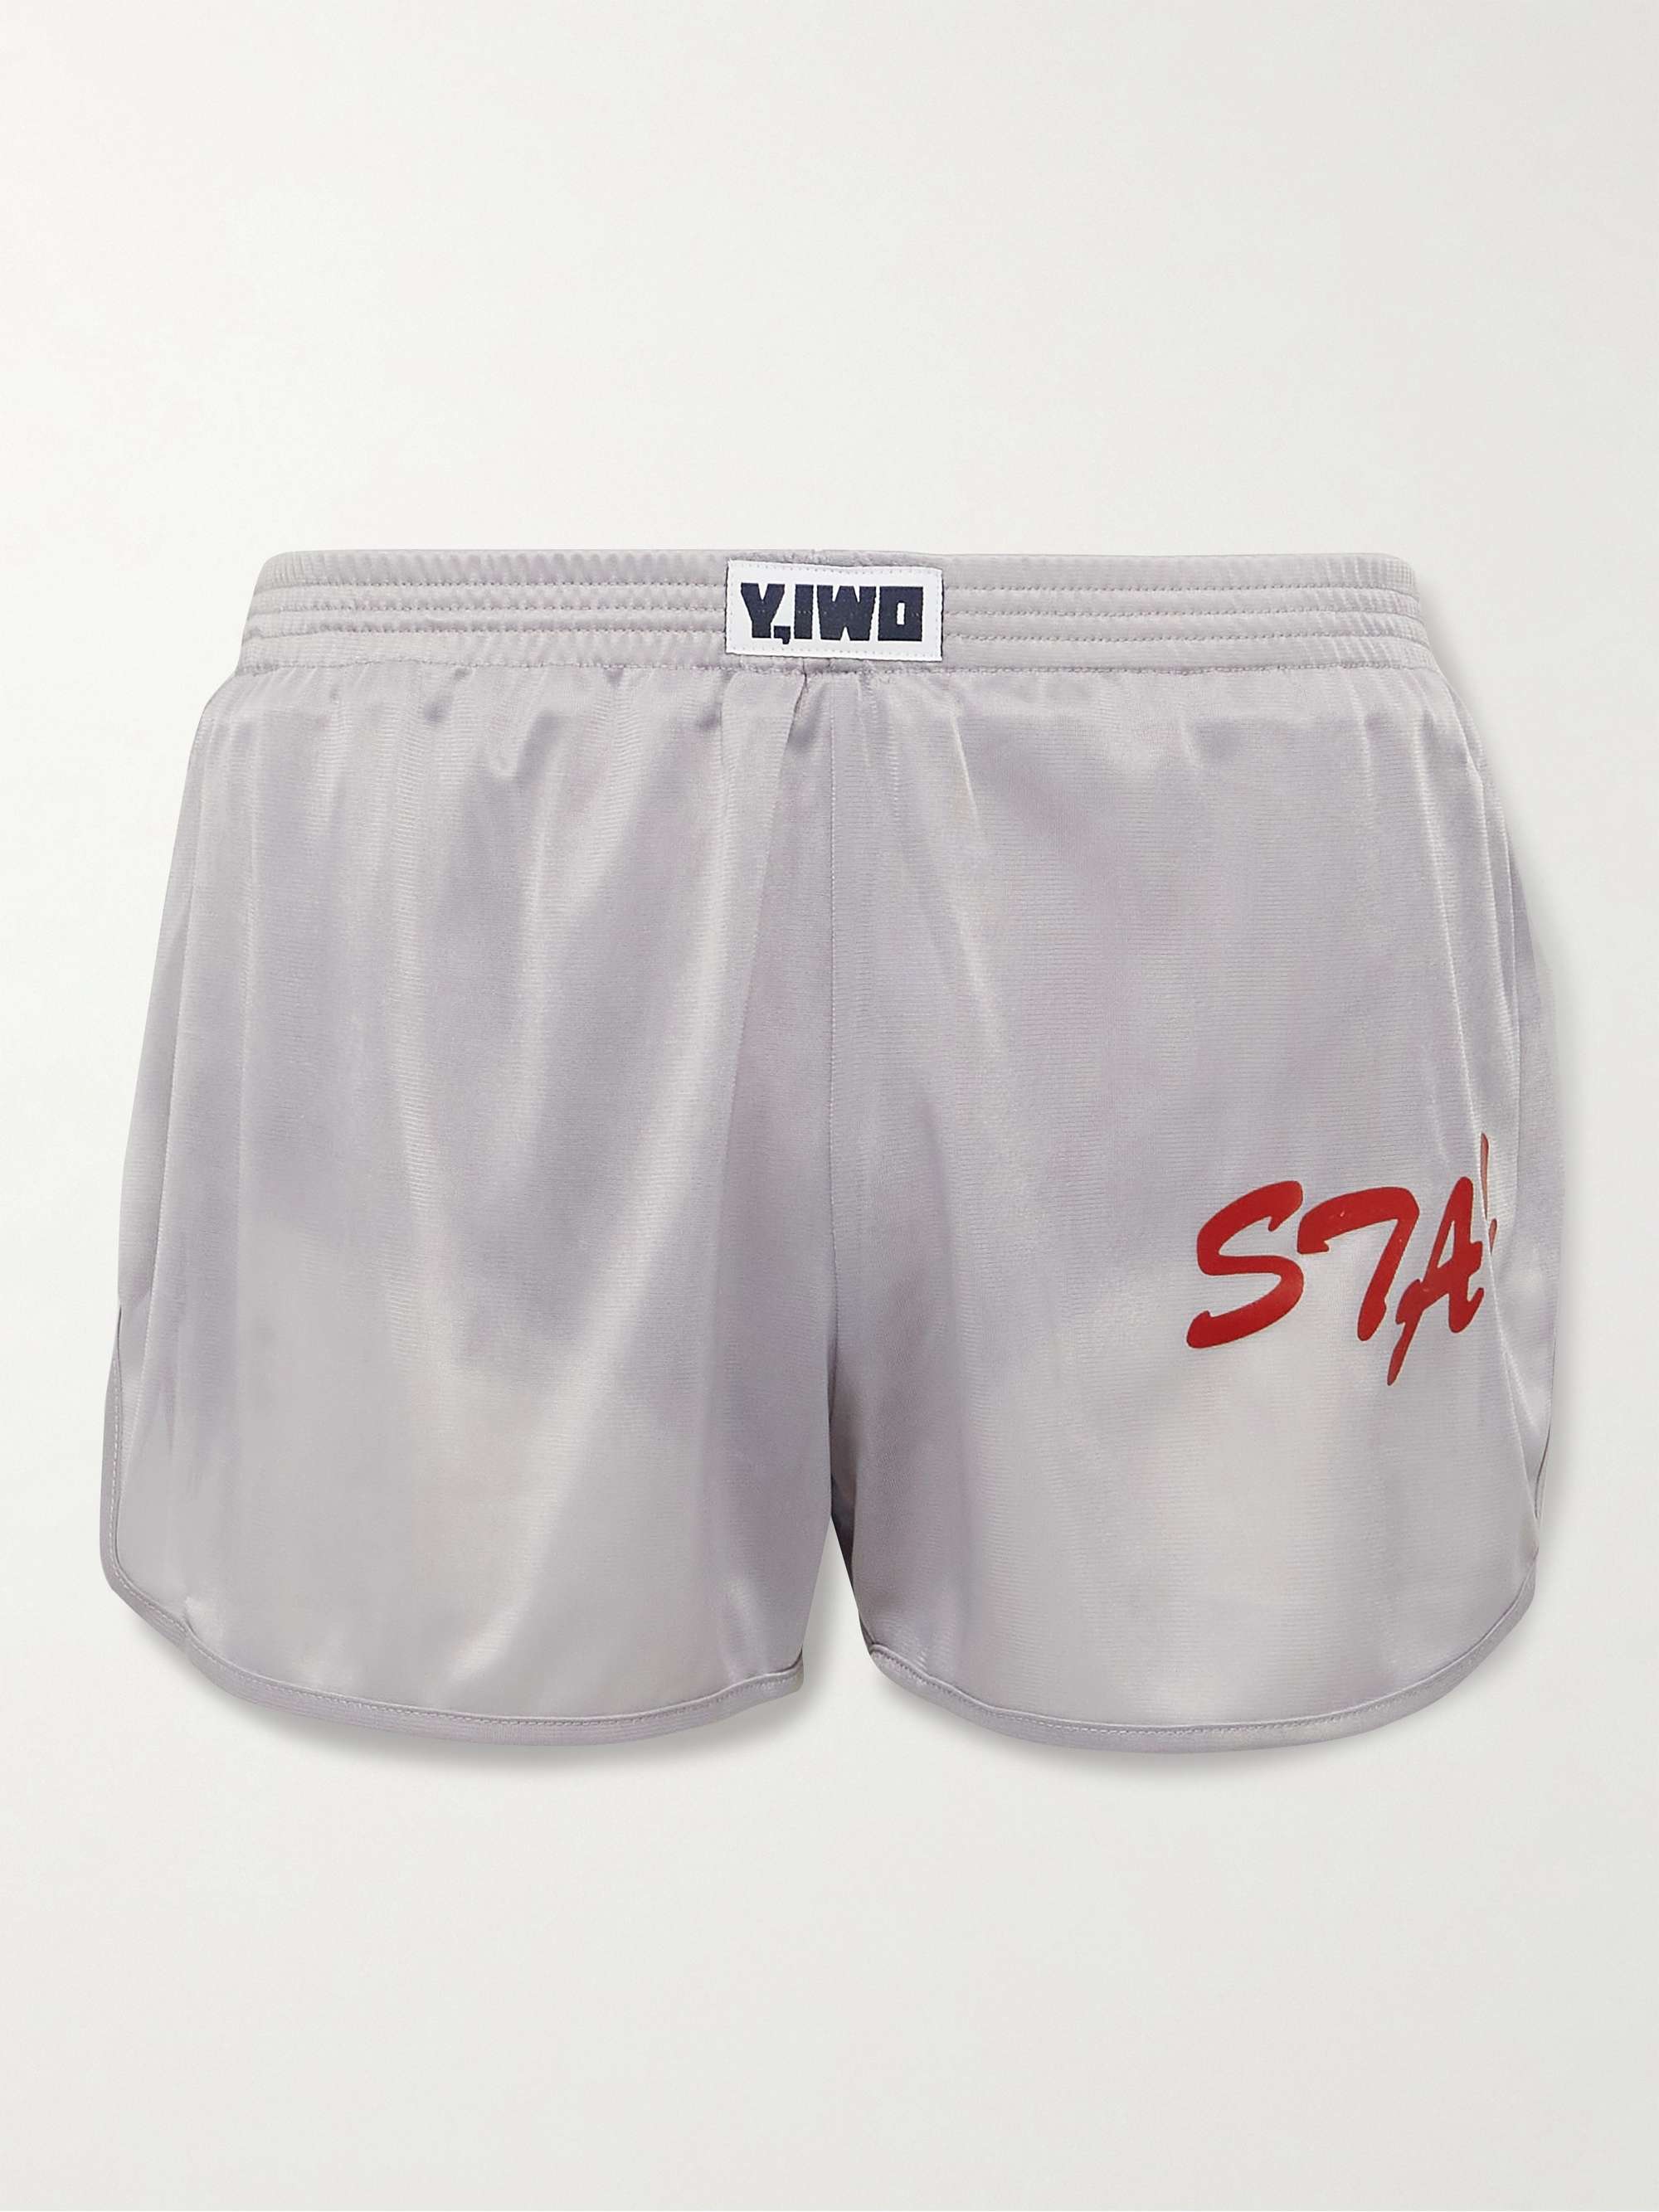 Y,IWO Slim-Fit Printed Jersey Shorts